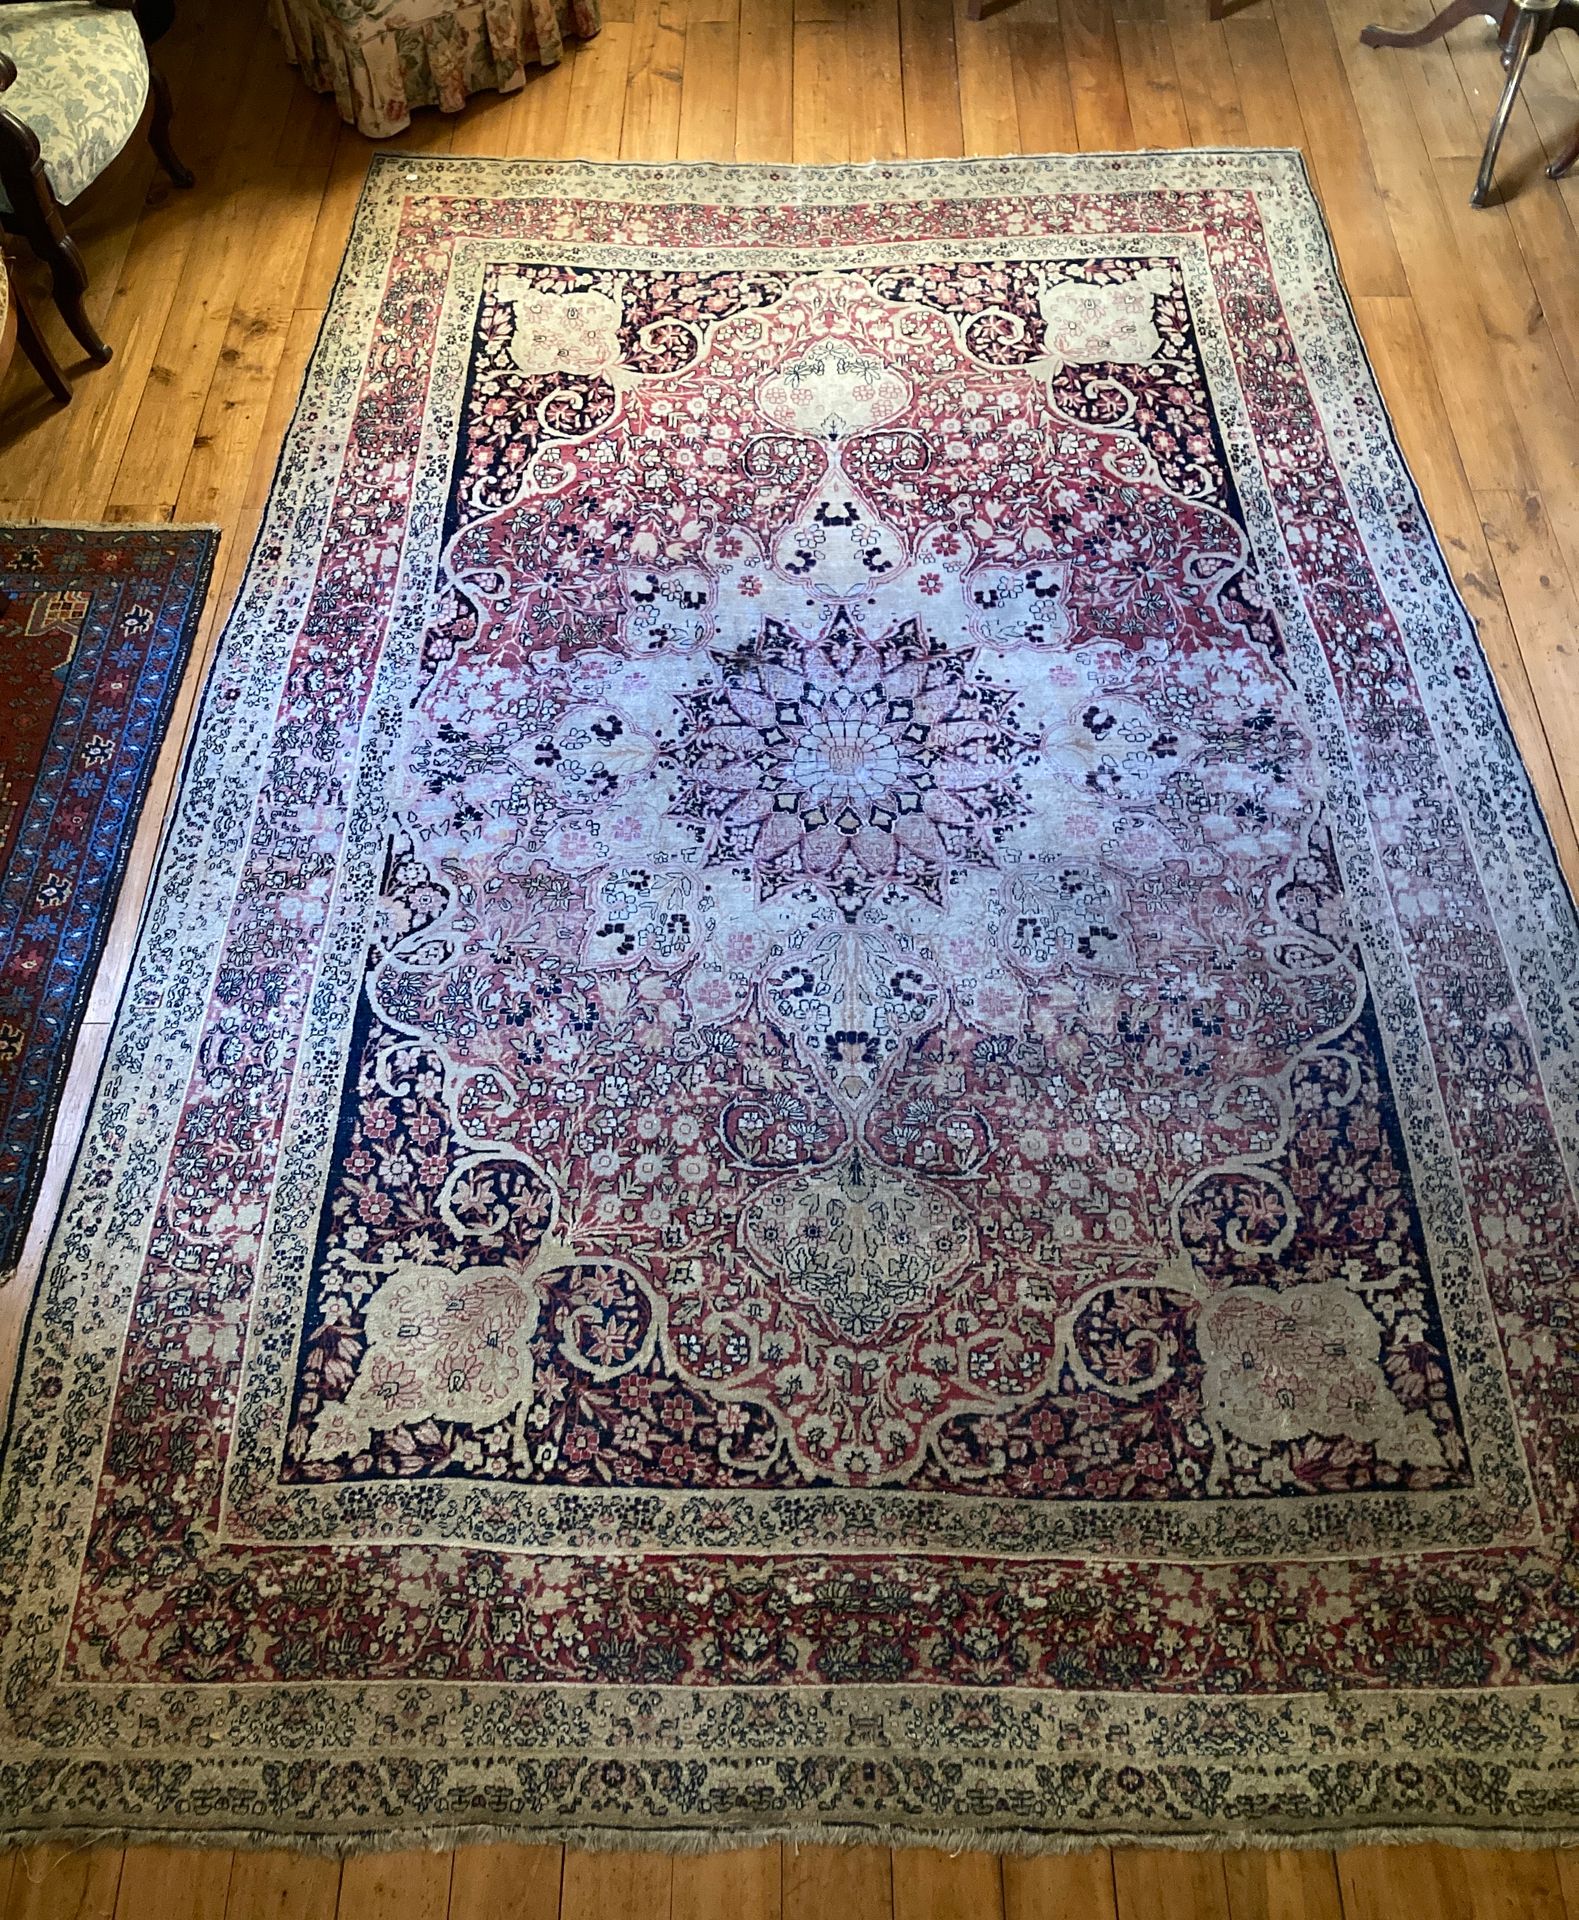 Null 174 KIRMAN carpet (Iran) - an old carpet, worn, partial black background.

&hellip;